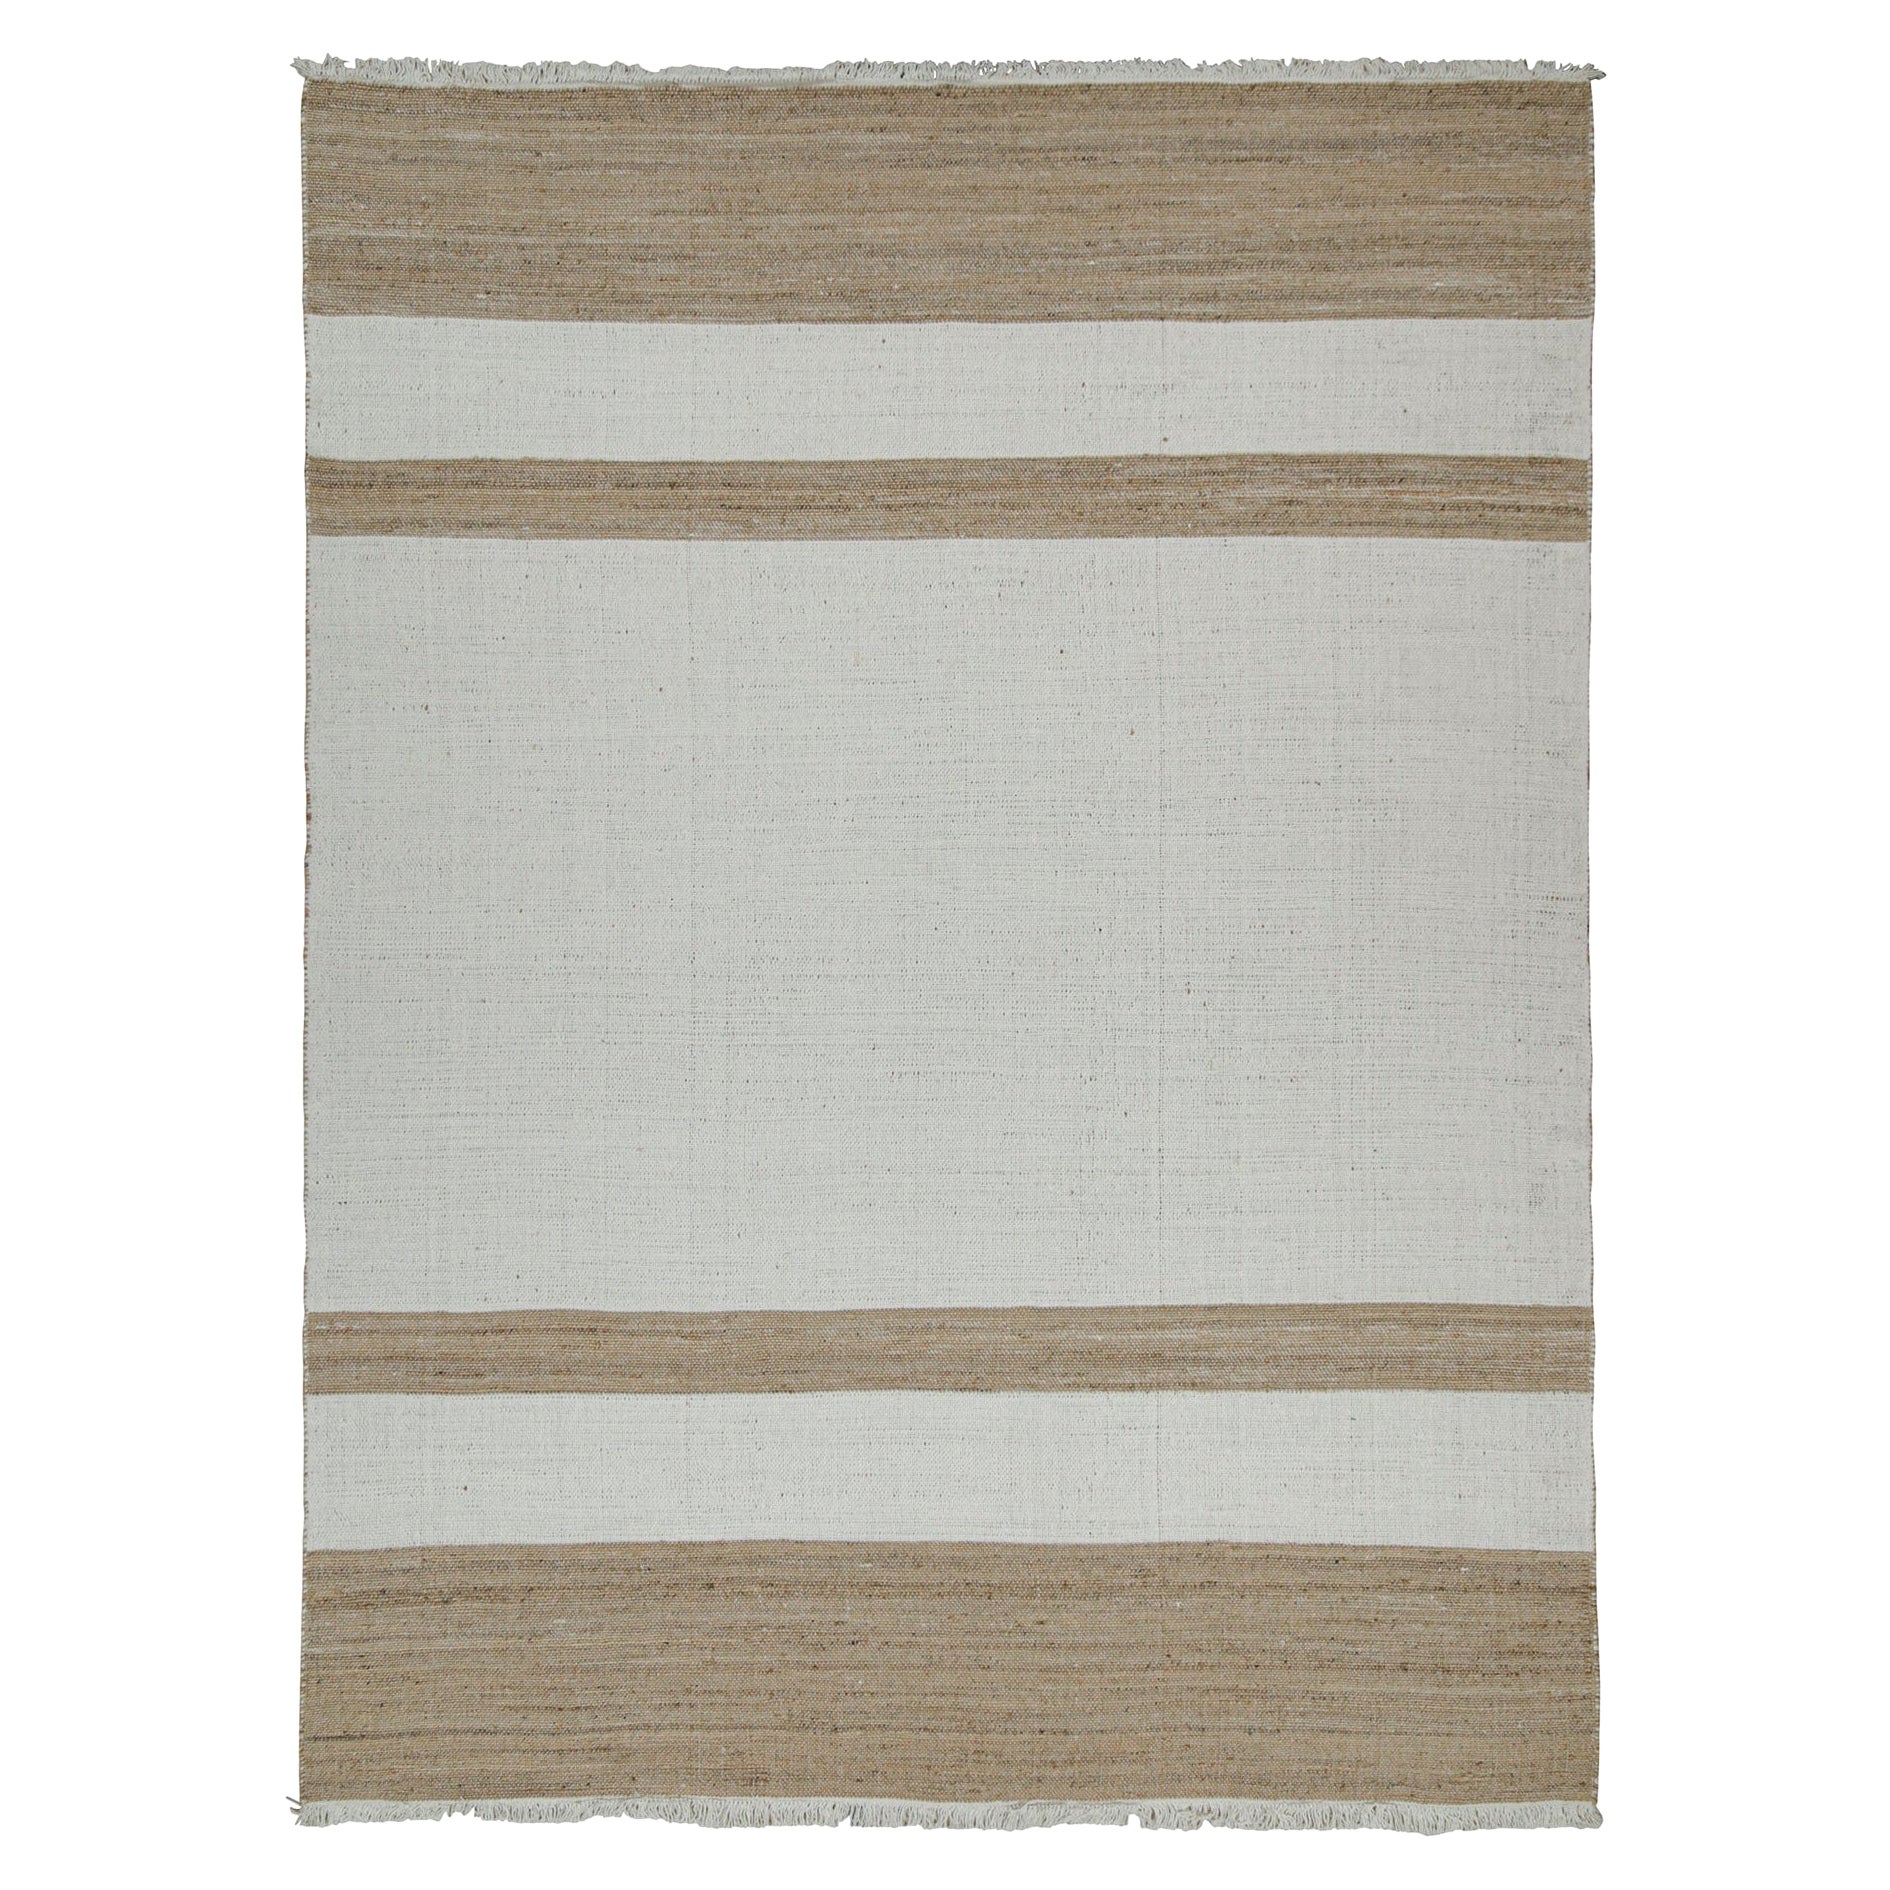 Tapis & Kilim's Contemporary Jute Flat Weave in White and Beige-Brown Stripes (Tissu plat contemporain en jute à rayures blanches et beige-brun)